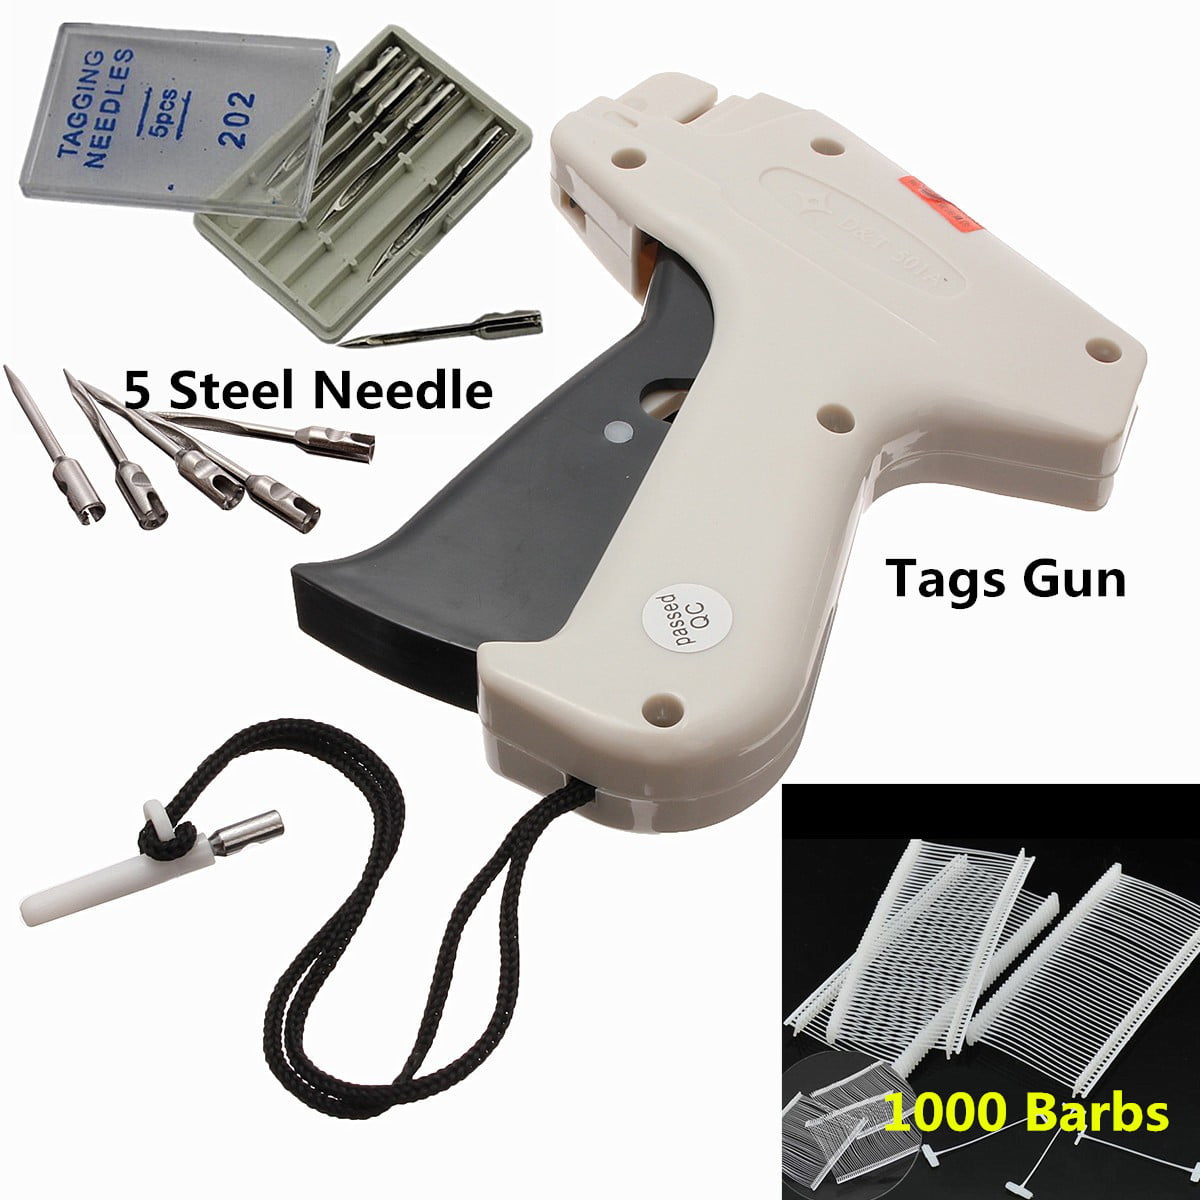 1000 Barbs+5 Needles US Clothing Socks Garment Price Label Tagging Tag Gun Tool 